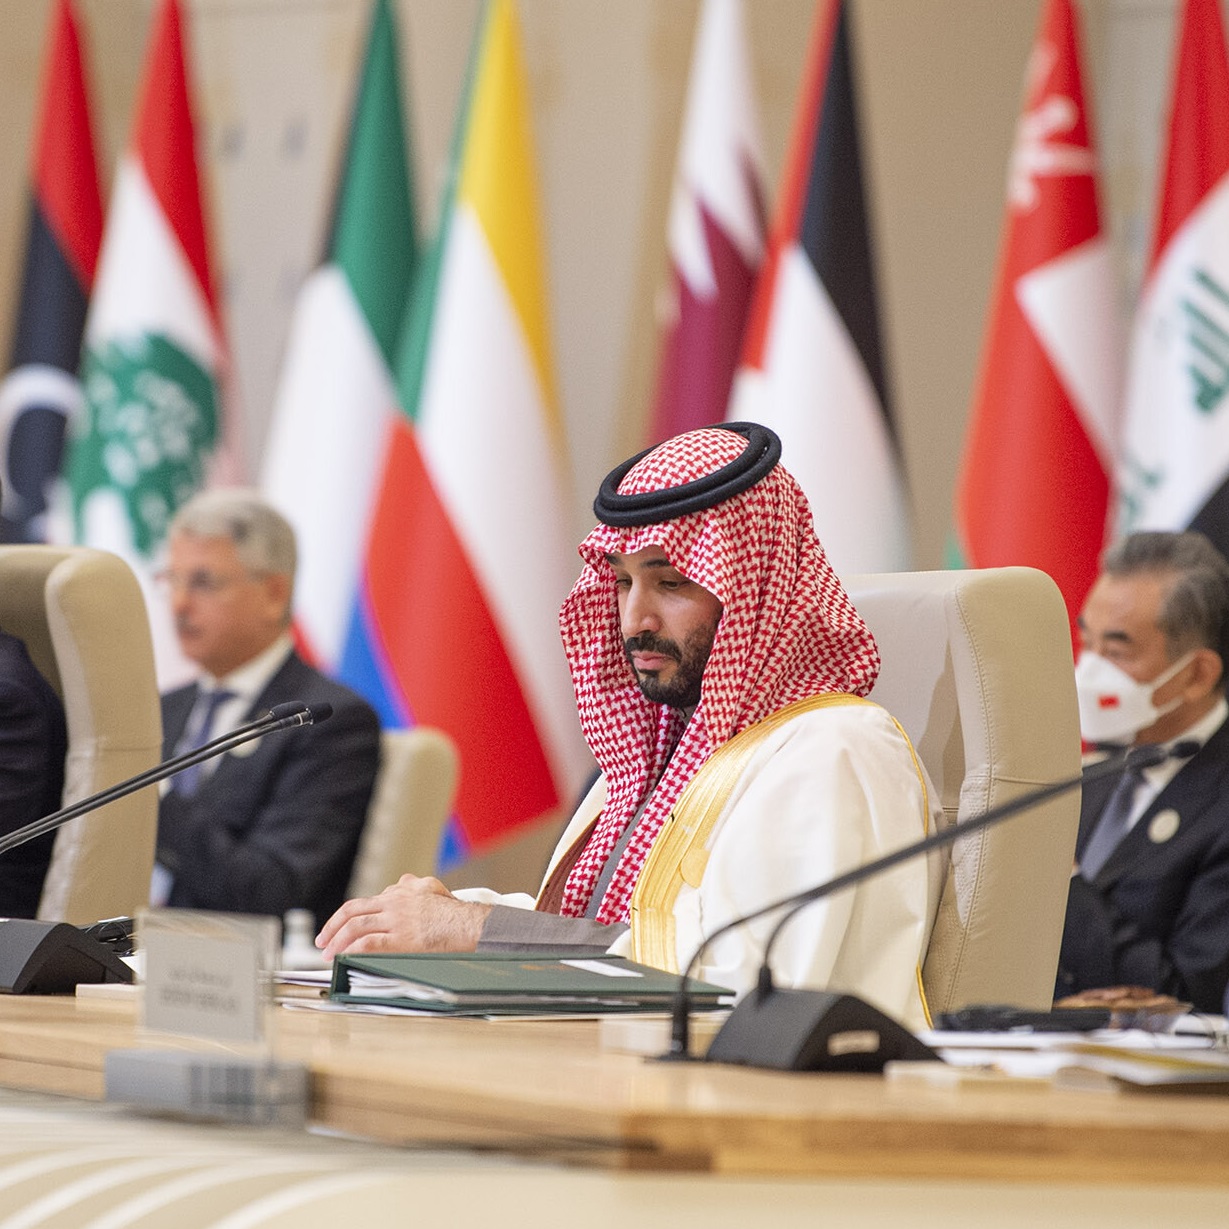 Crown Prince of Saudi Arabia Mohammad bin Salman al-Saud makes a speech during the 43rd Gulf Cooperation Council (GCC) Summit in Riyadh, Saudi Arabia on 9 December 2022. Photo: Royal Court of Saudi Arabia / Anadolu Agency via Getty Images